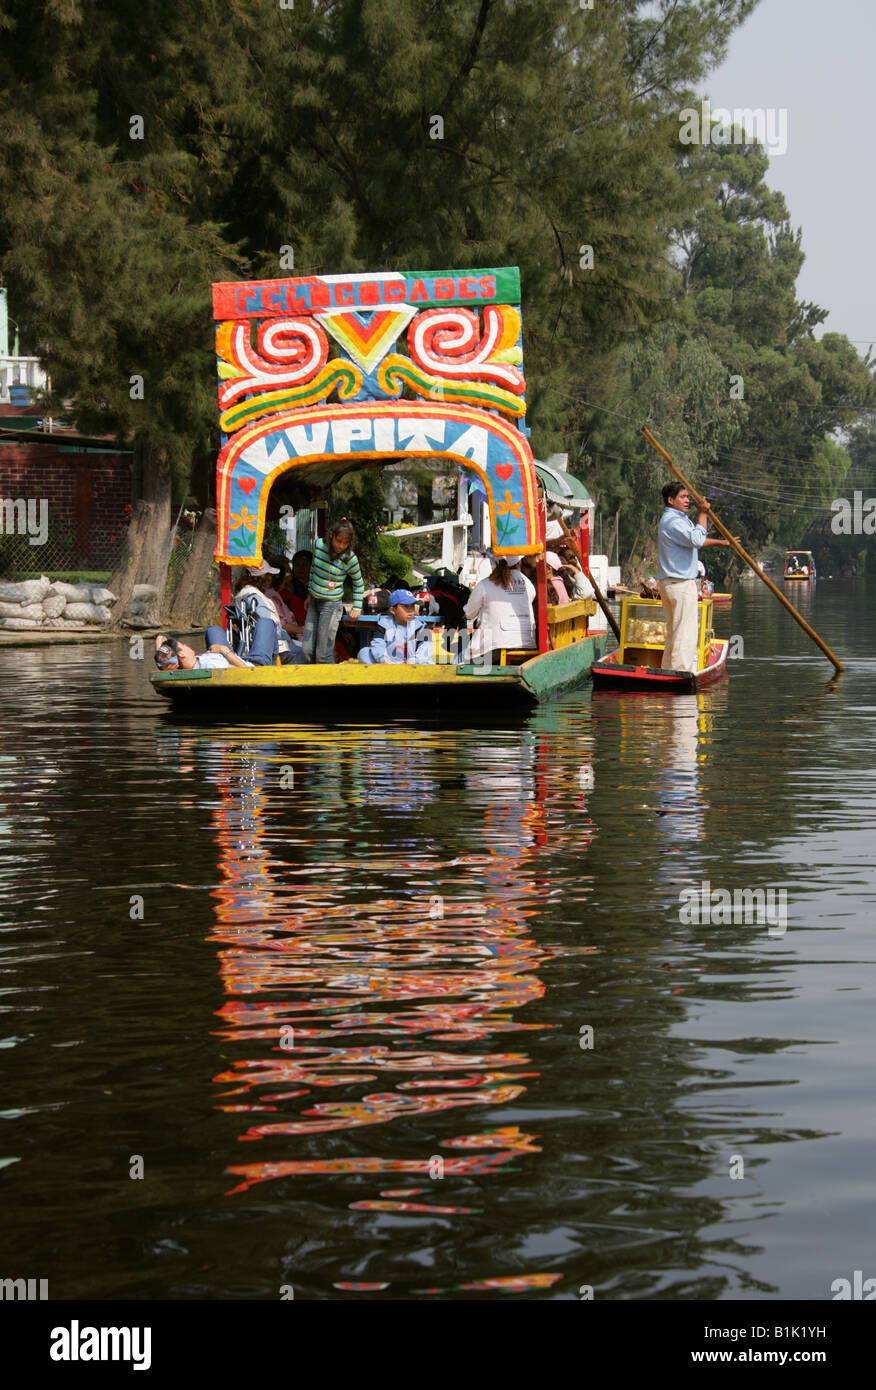 Trajinera Boat on the Canals of the Floating Gardens of Xochimilco Mexico City Stock Photo